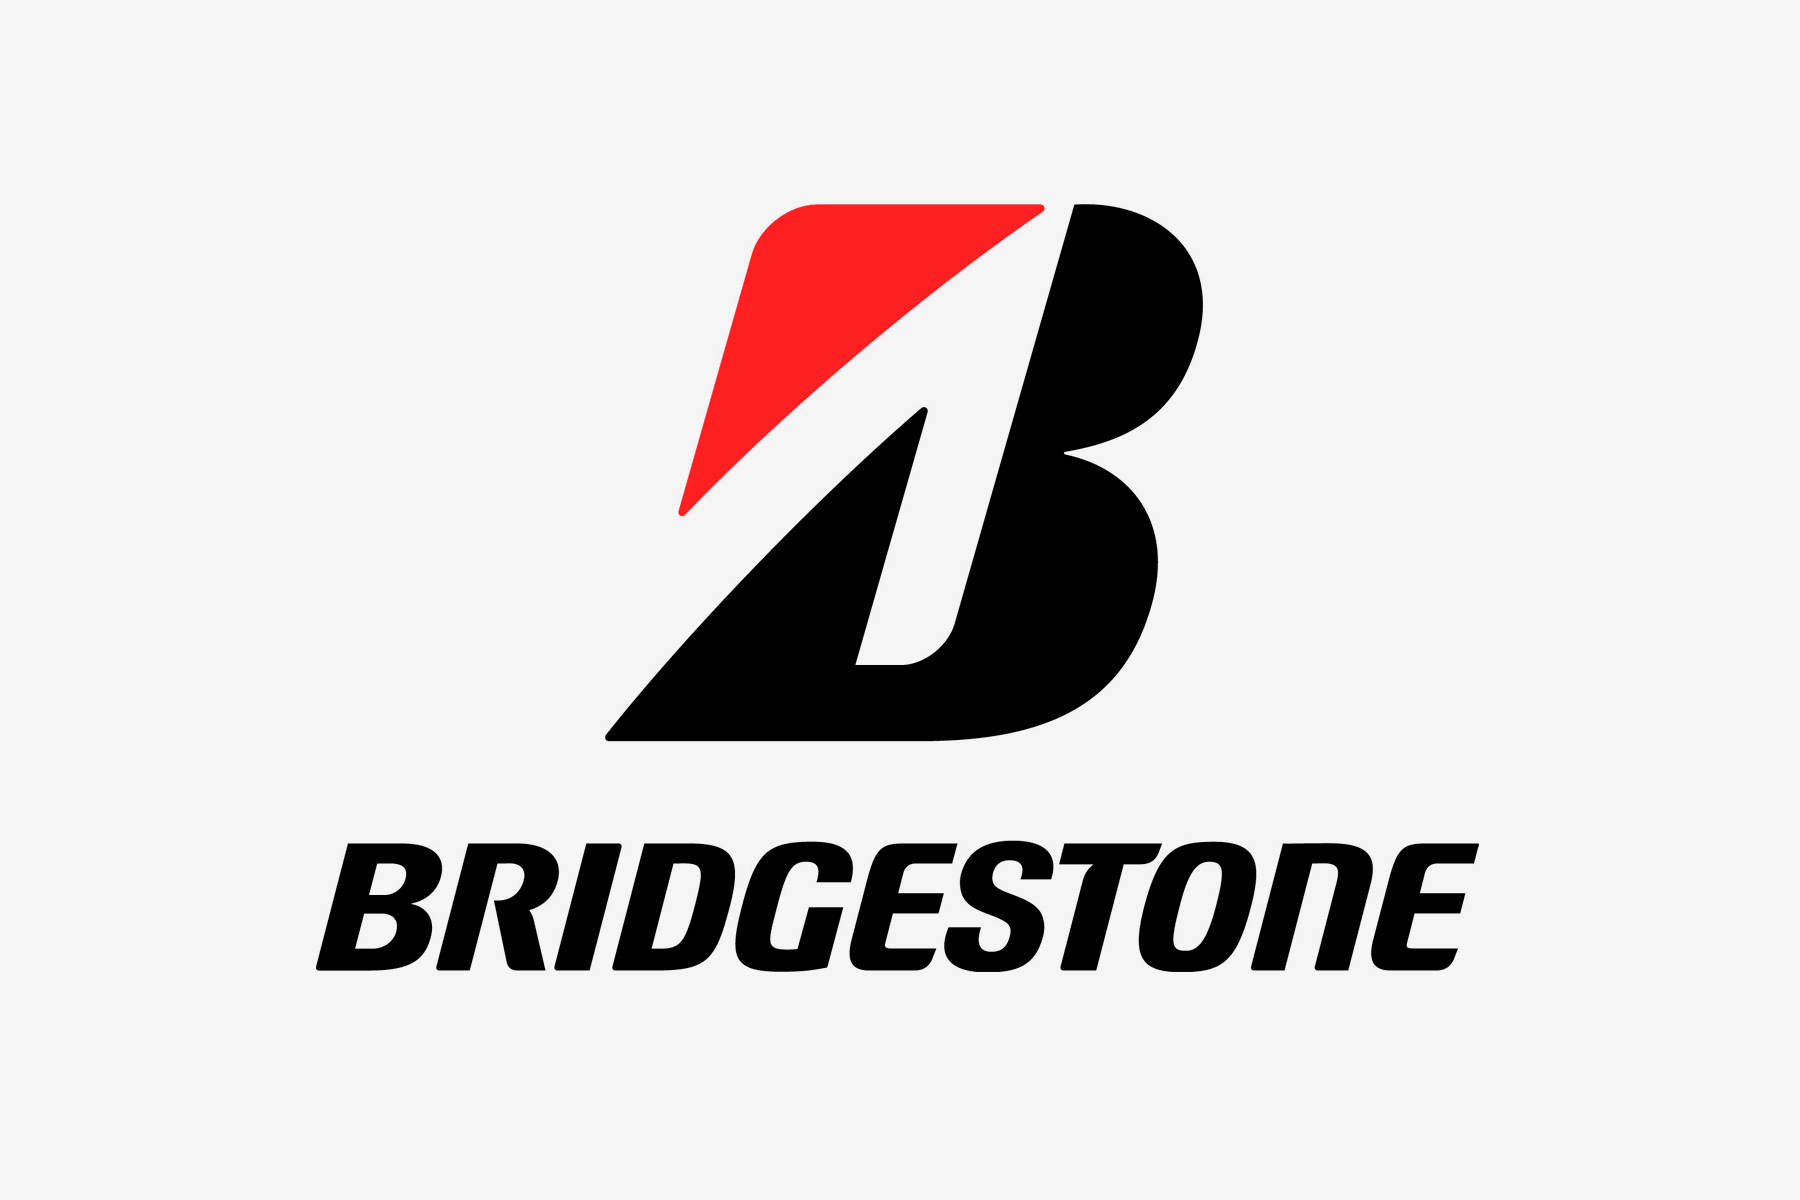 Bridgestone Red Black Logo Wallpaper